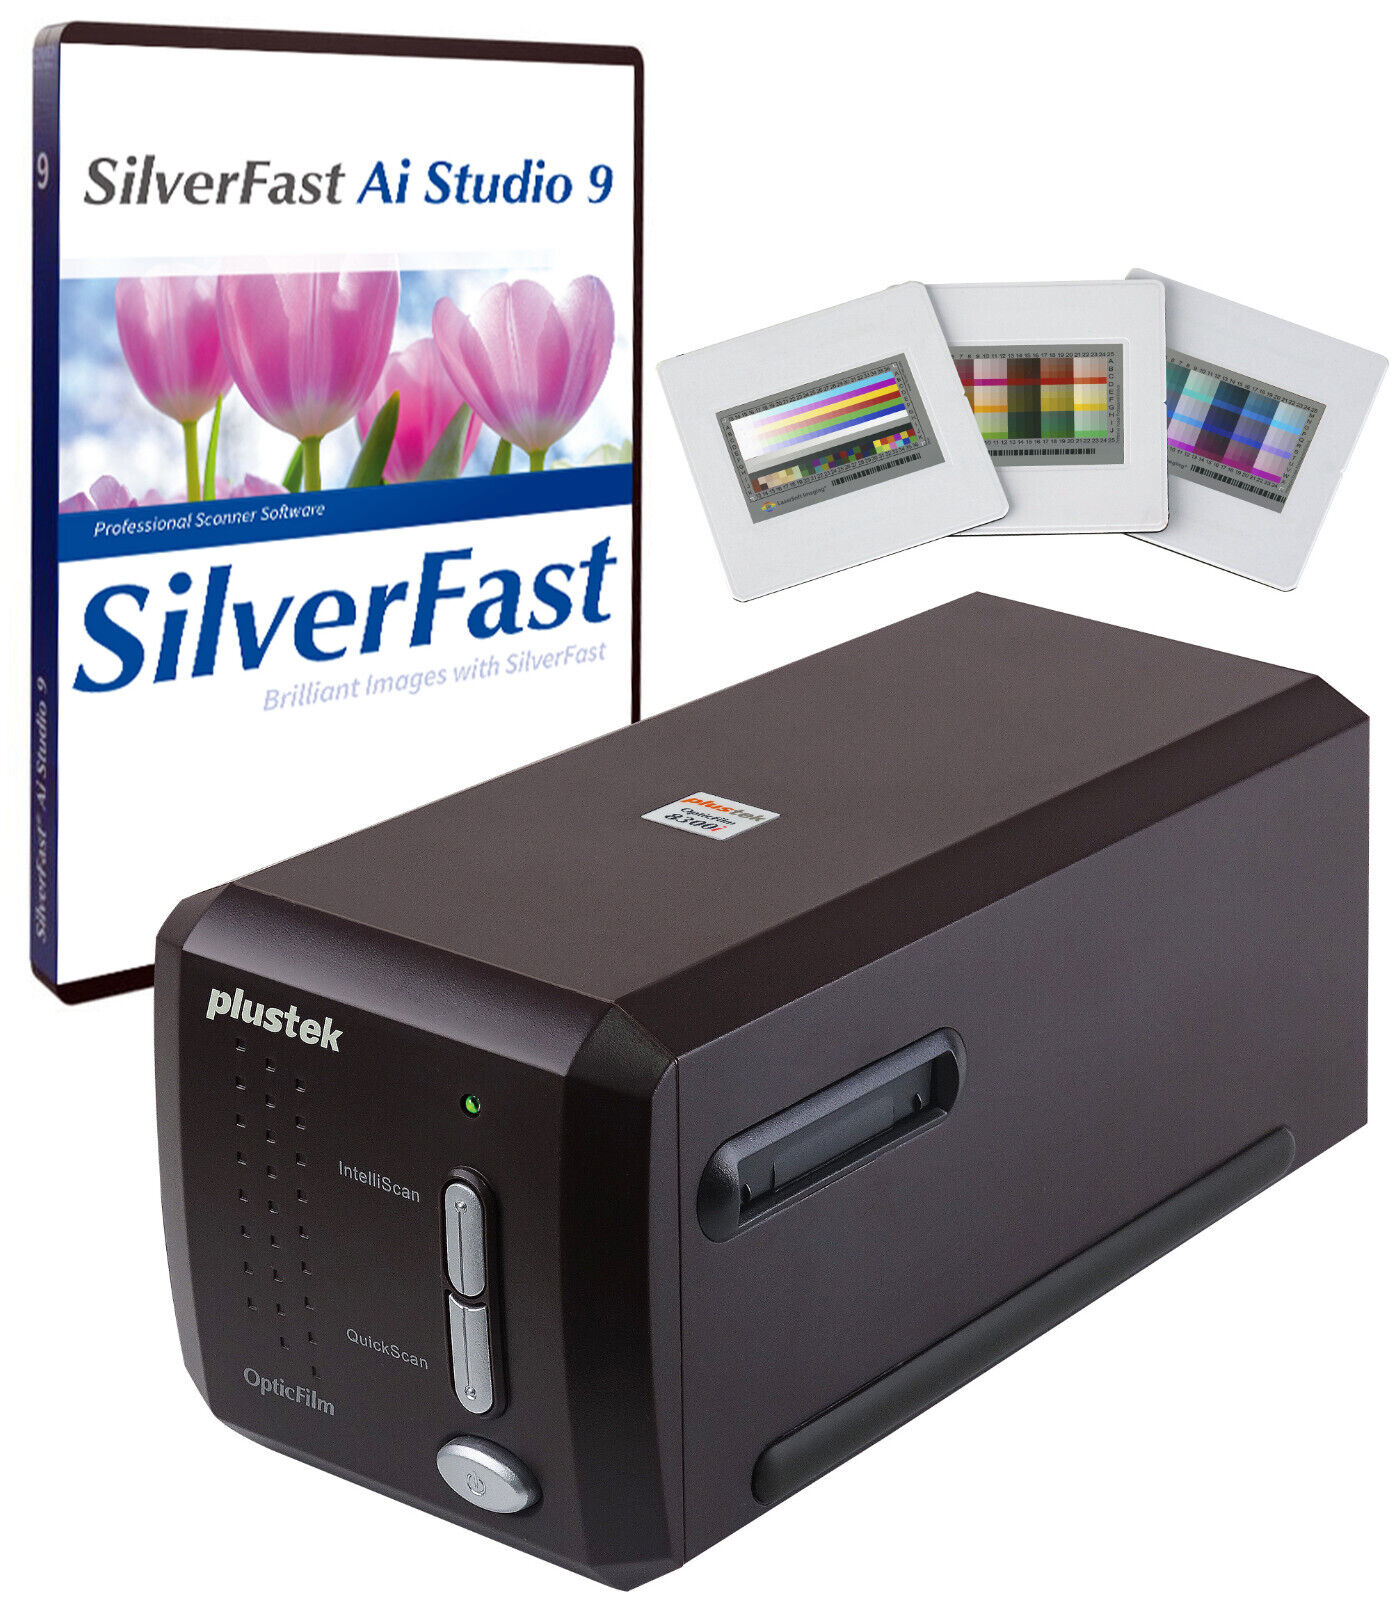 Plustek OpticFilm 8300i Ai Film Scanner Bundle with SilverFast Ai Studio 9